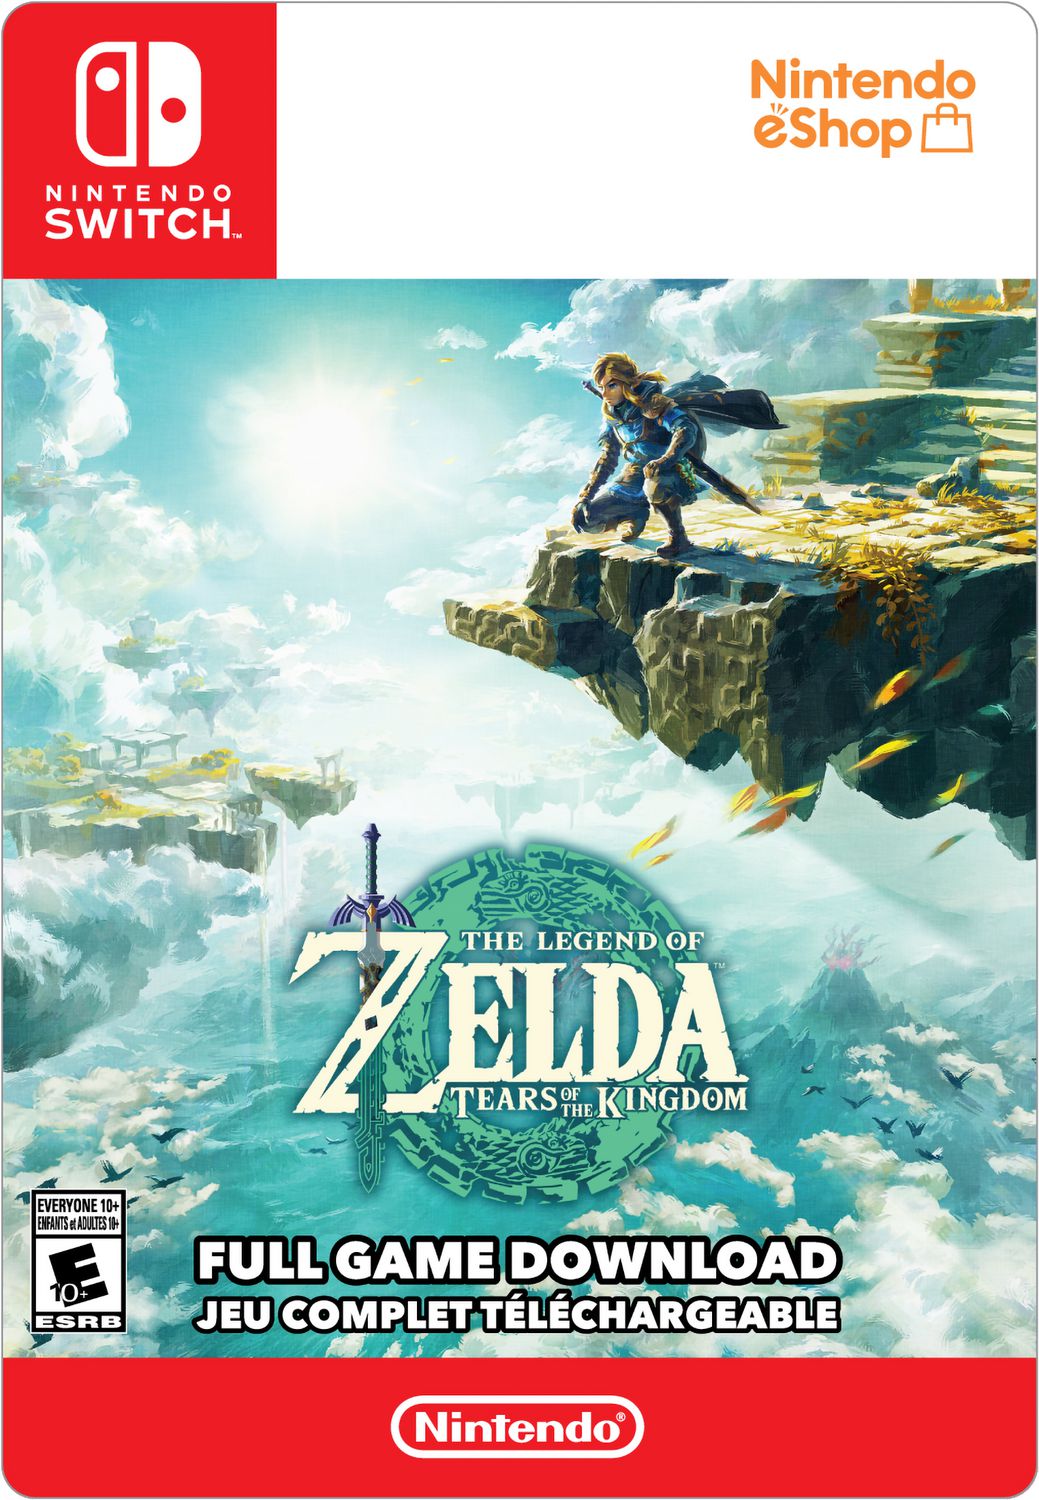 The Legend of Code] the Zelda: [Digital Kingdom of Tears Switch - Nintendo